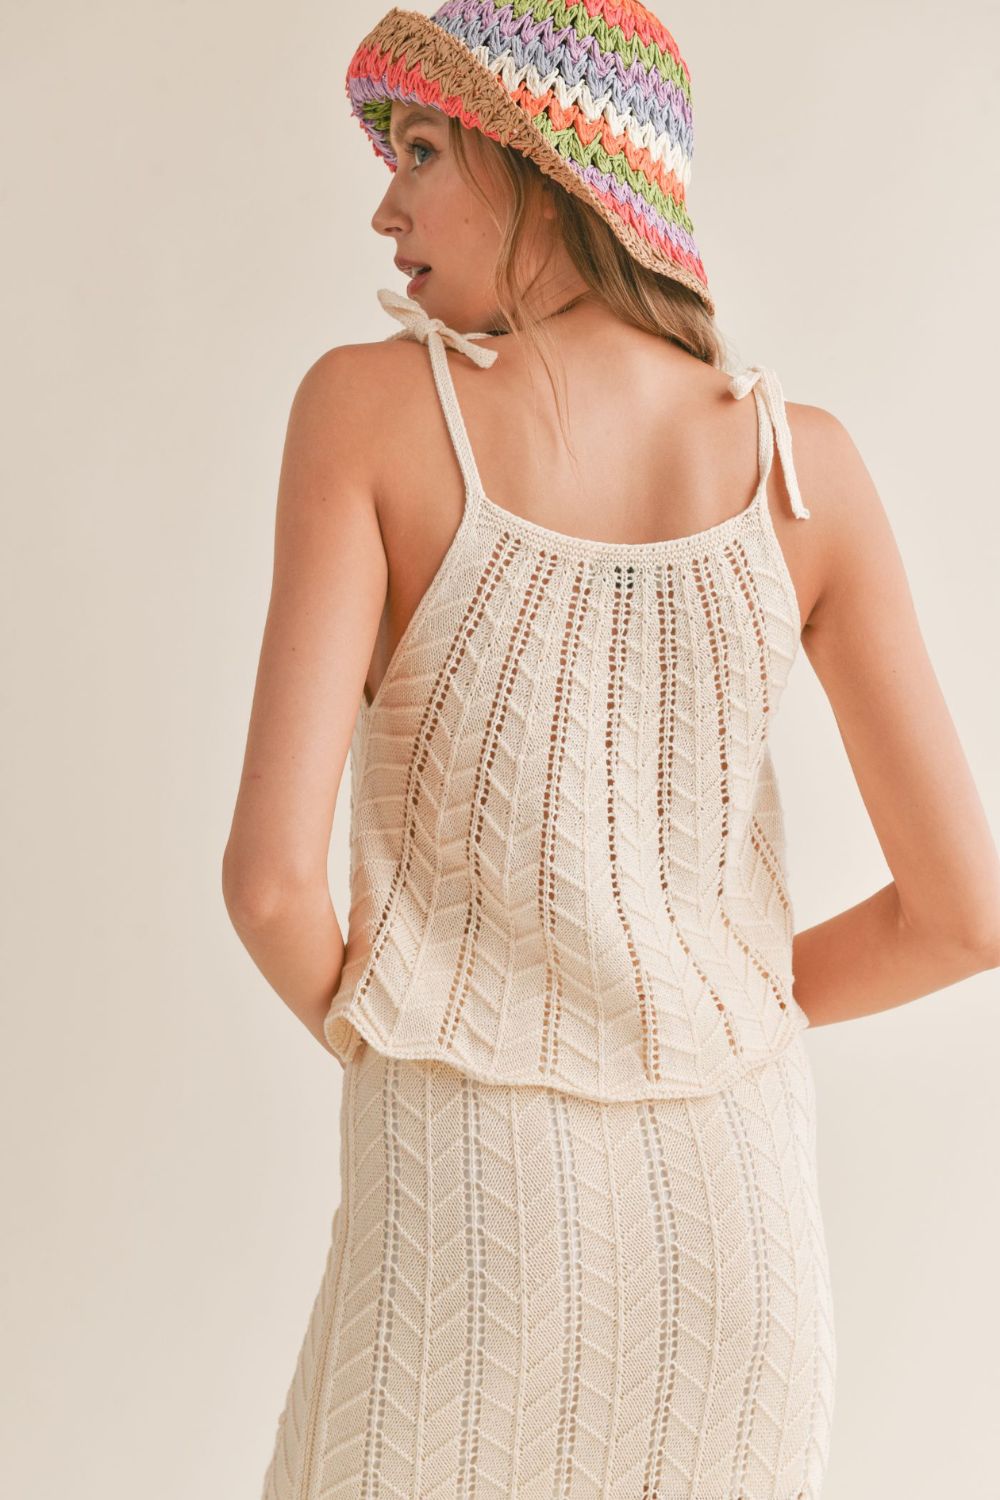 Women's Chevron Pointelle Knit Crochet Summer Tank | Cream - Women's Shirts & Tops - Blooming Daily